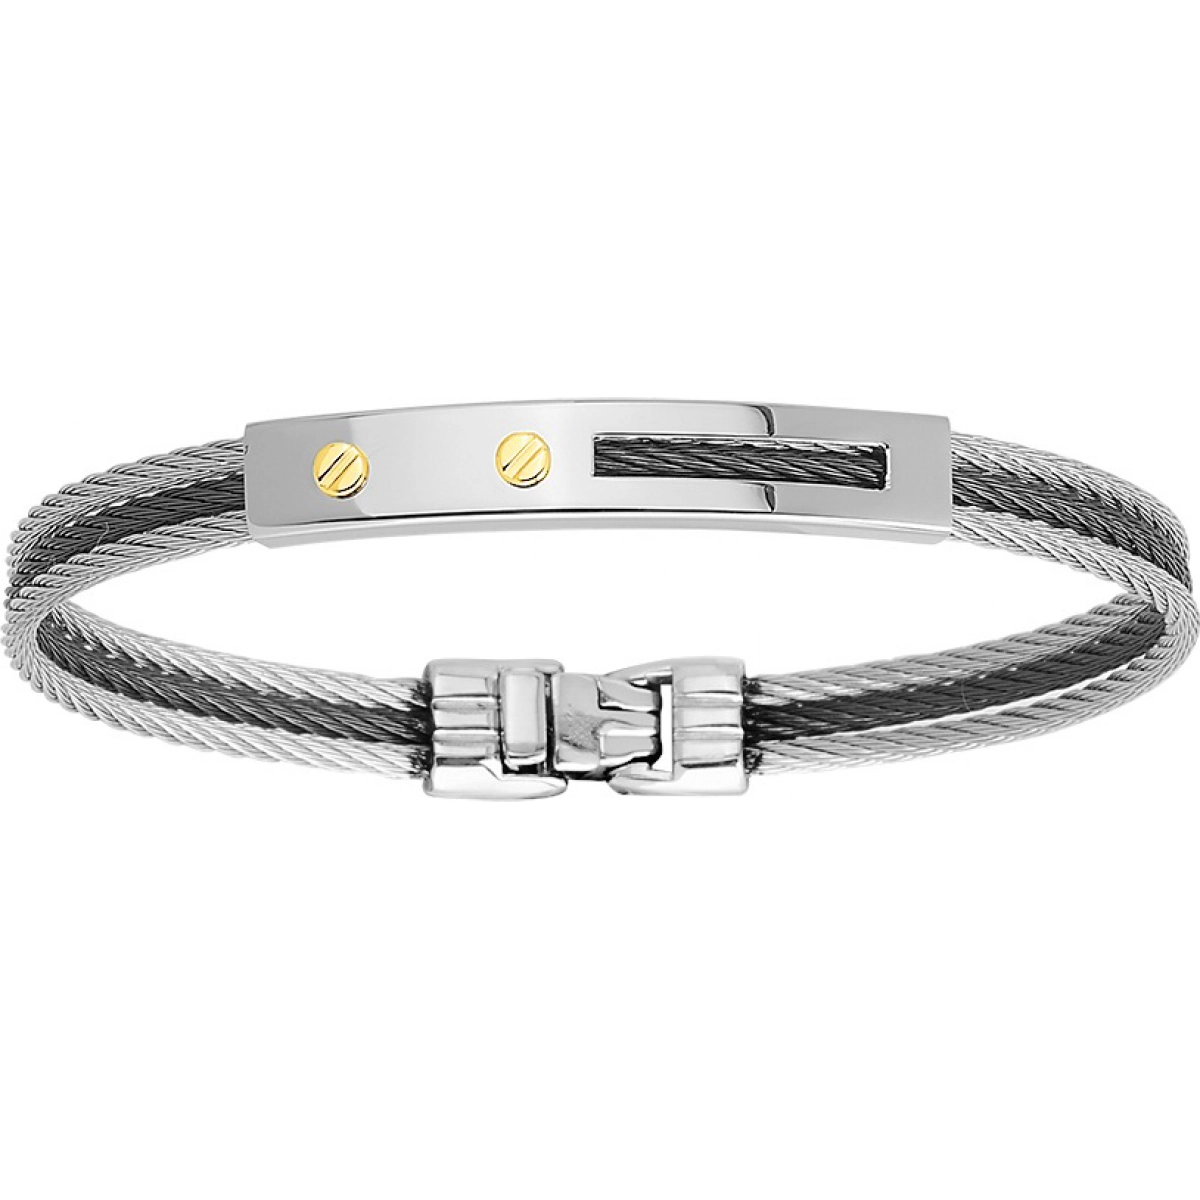 Bracelet acier motif vis or750j  Lua Blanca  6275.0